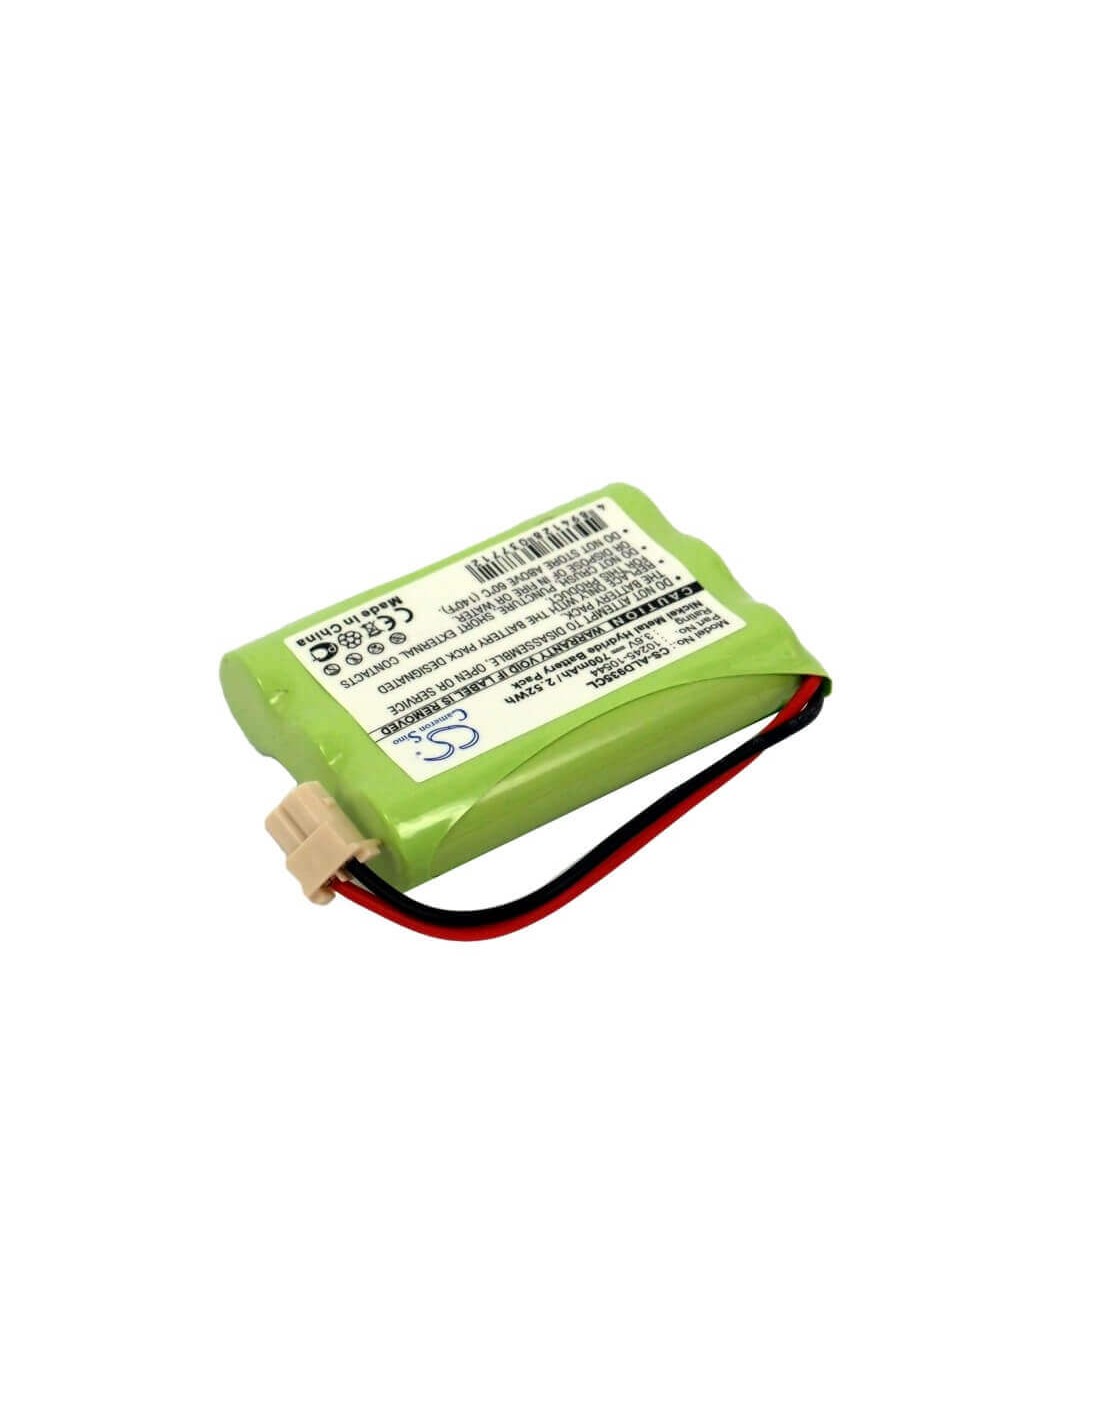 Battery for Audioline, Cdl935g 3.6V, 700mAh - 2.52Wh